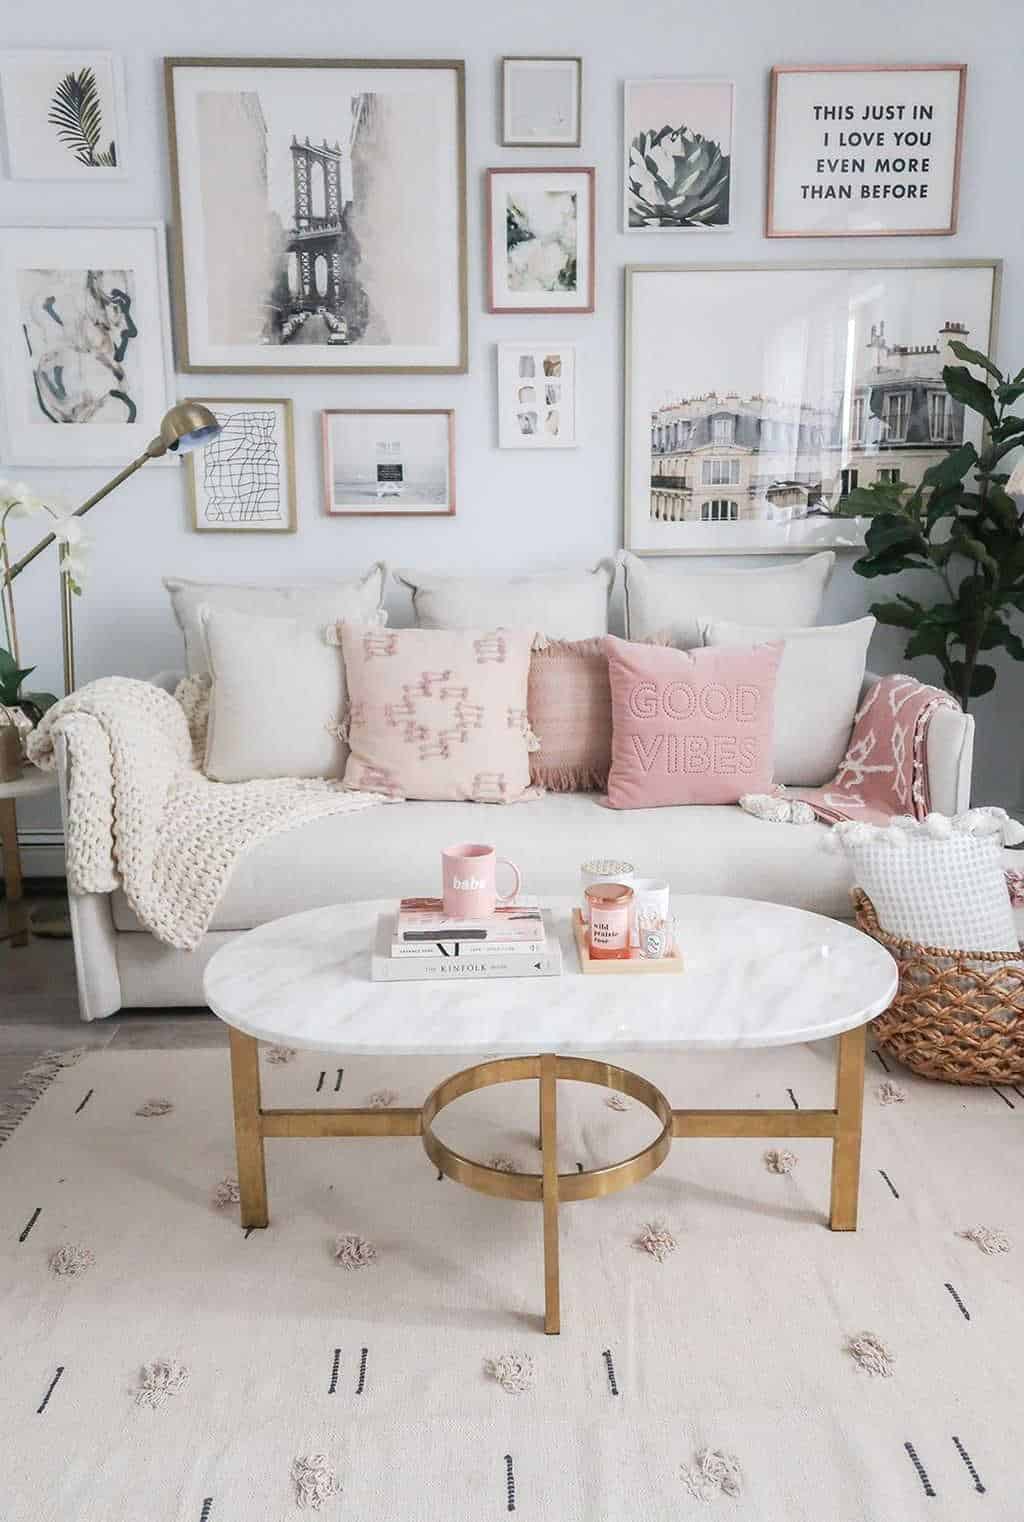 25 Adorable Shabby Chic Living Room Ideas You Ll Love - Shabby Chic Home Decor Ideas